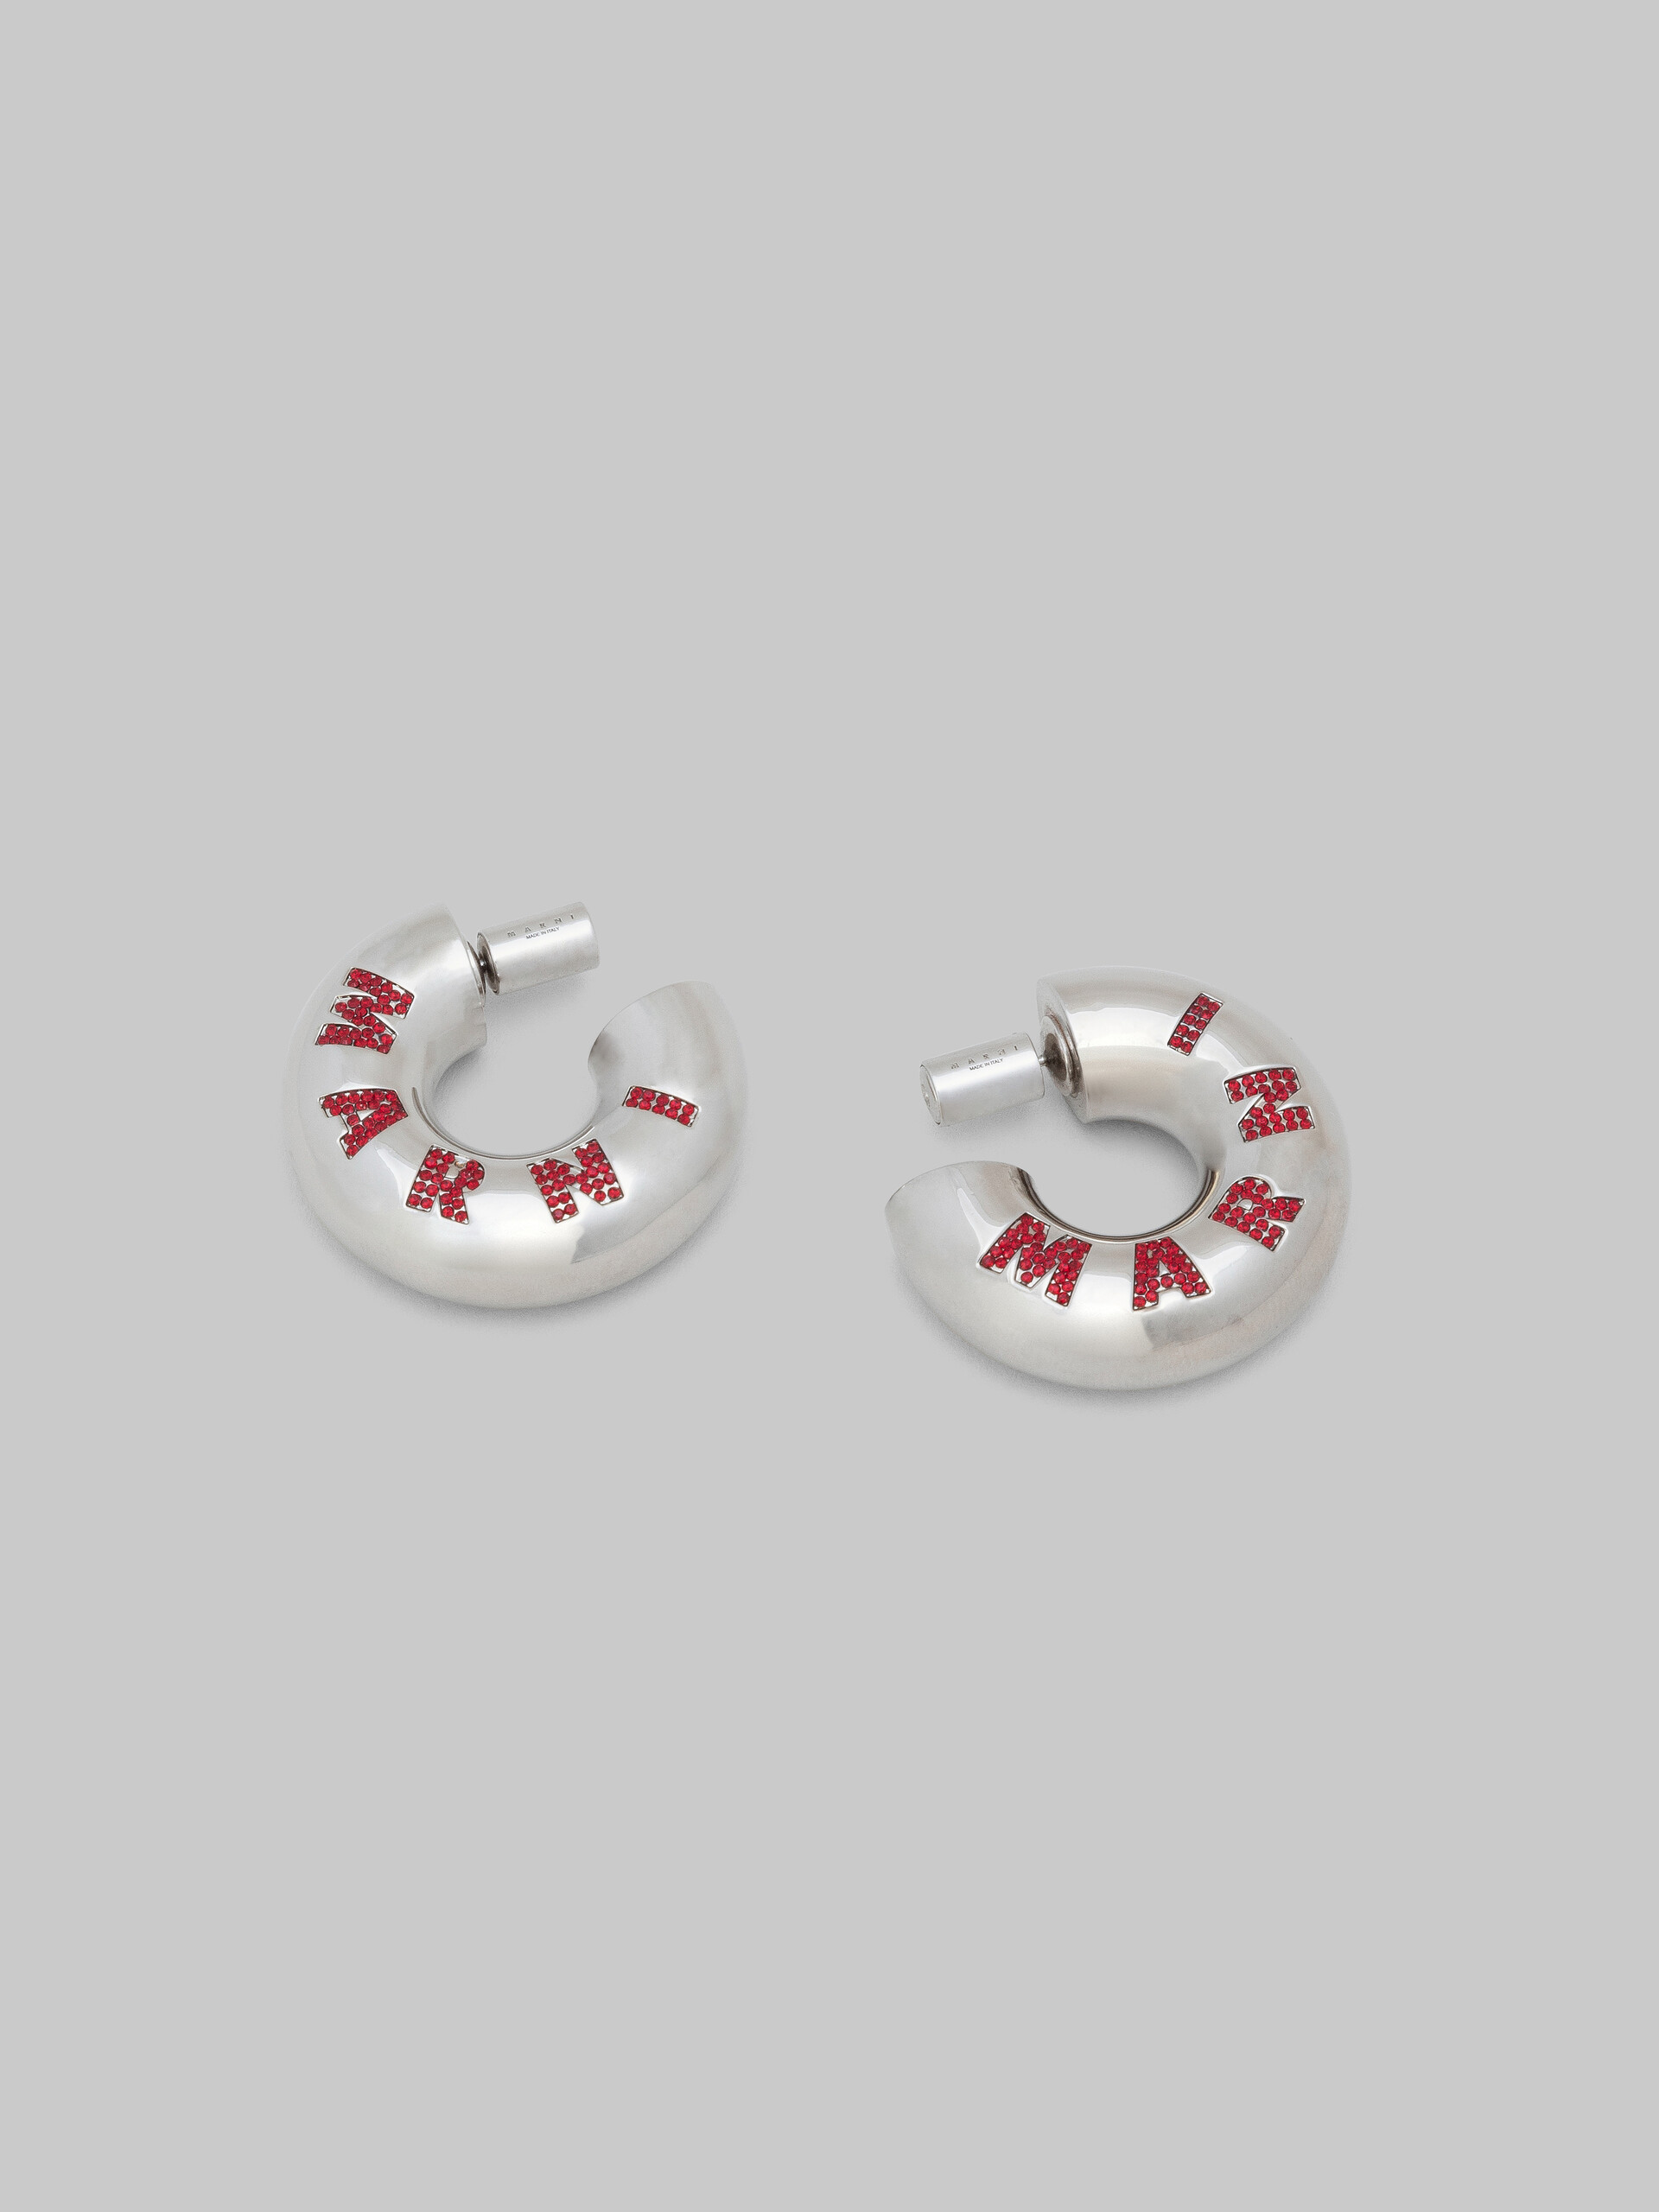 Silver tube earrings with rhinstone Marni logo - Earrings - Image 4